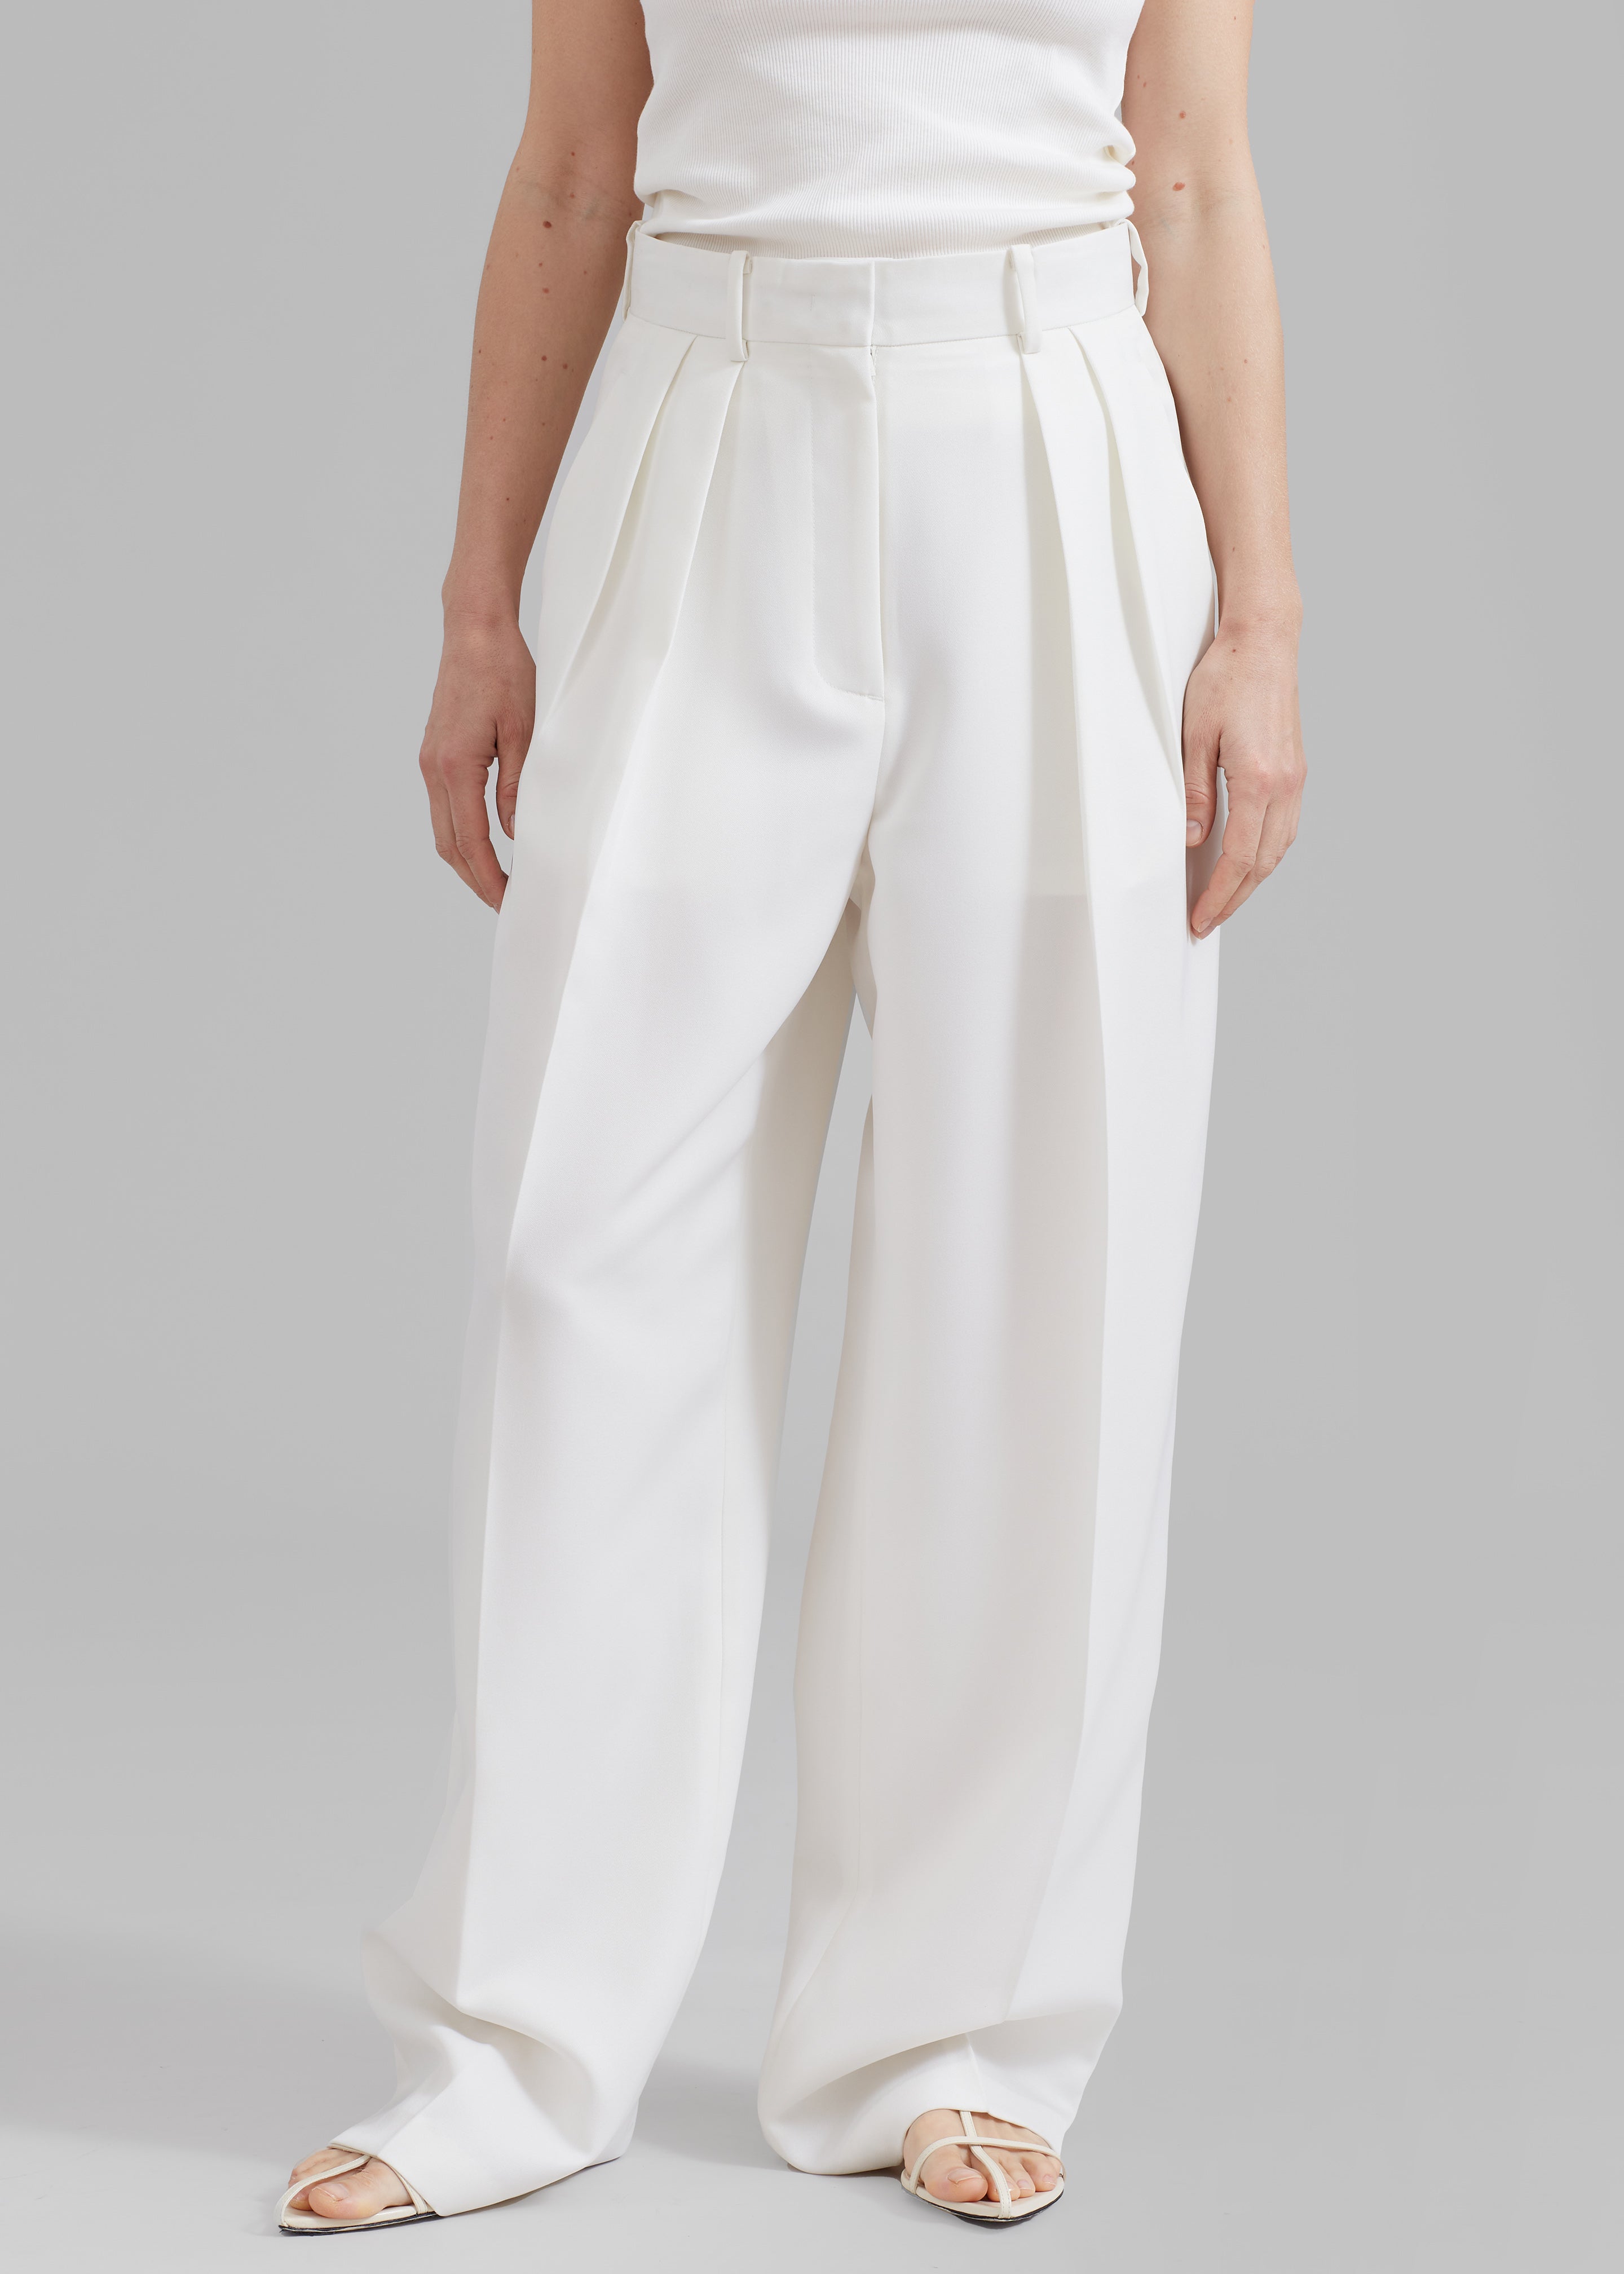 Zia Pintuck Trousers - White - 2